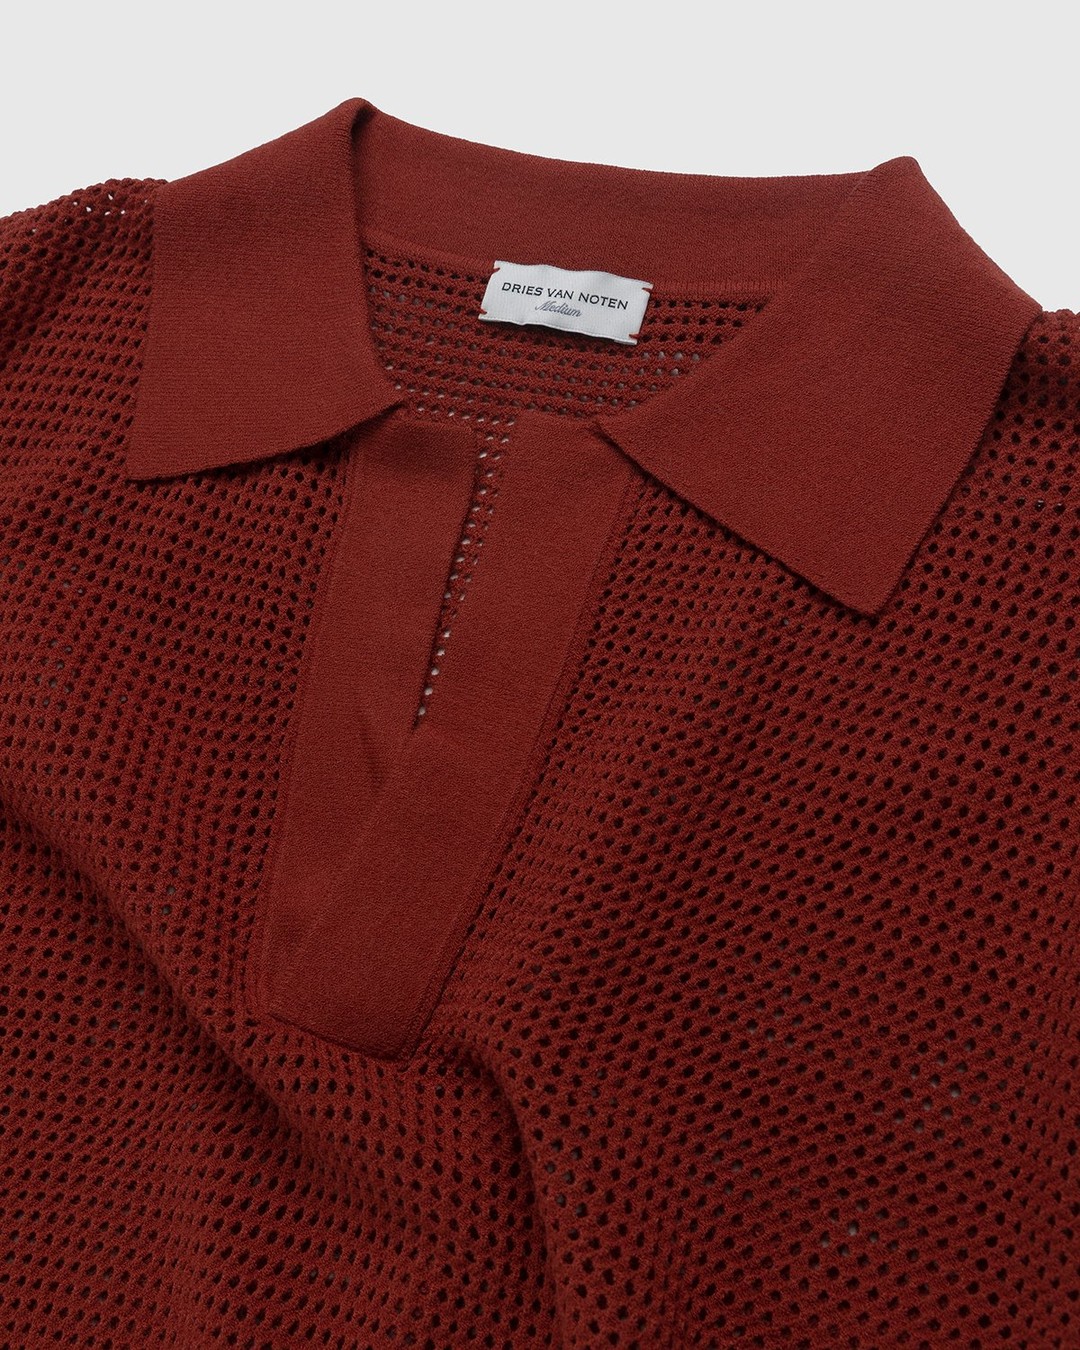 Dries van Noten – Jael Polo Shirt Brique - Polos - Red - Image 3